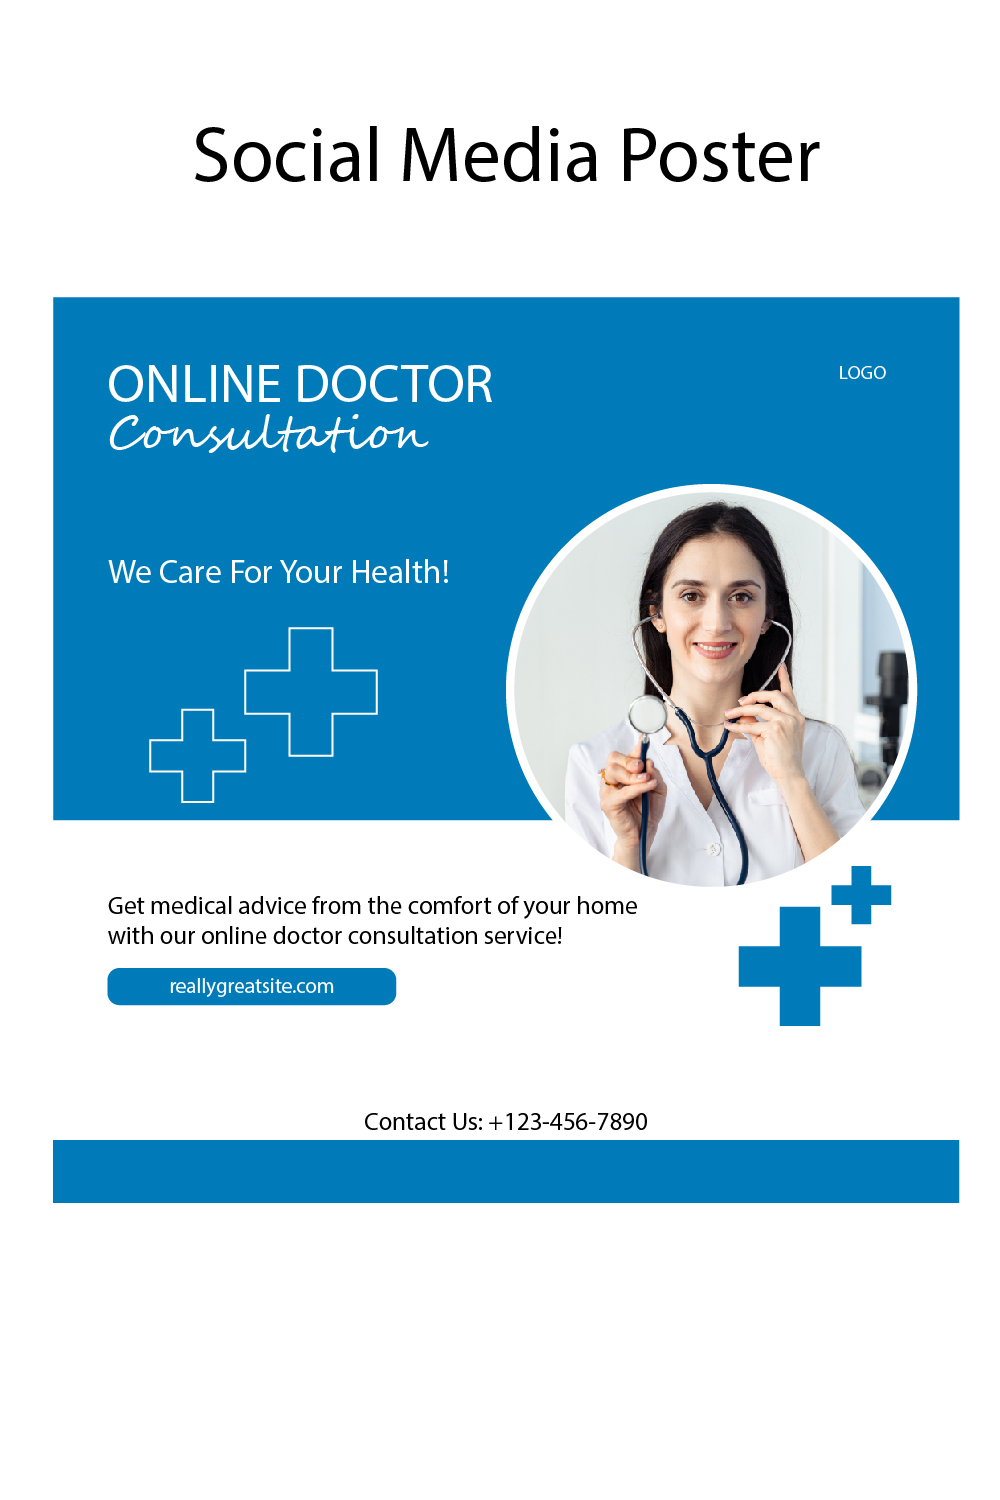 Online Doctor Consultation Social Media poster for Facebook and Instagram pinterest preview image.